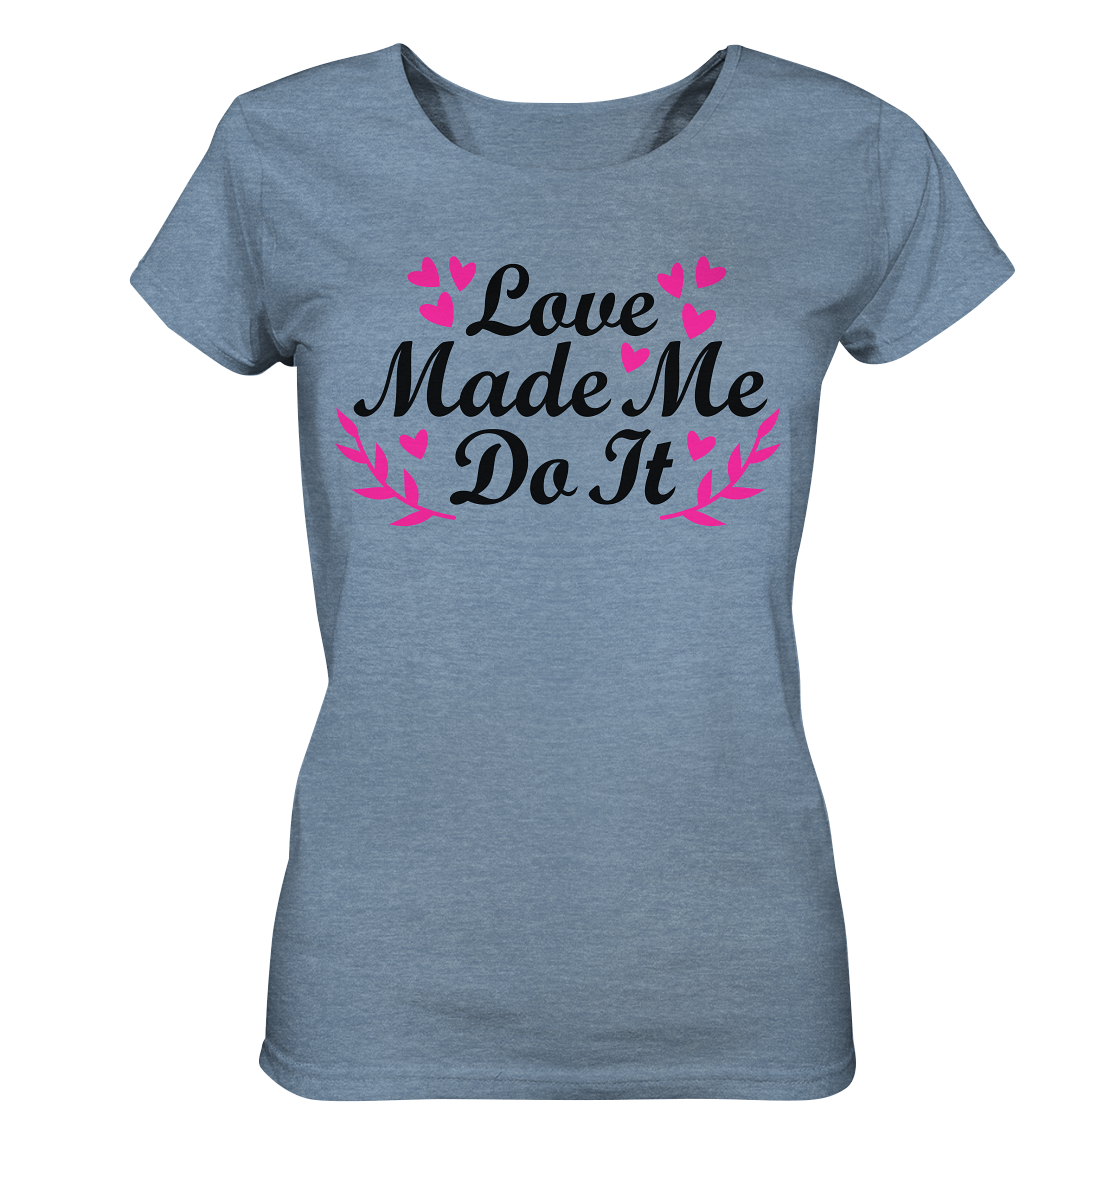 Love made me do it - Ladies Organic Shirt (mottled)